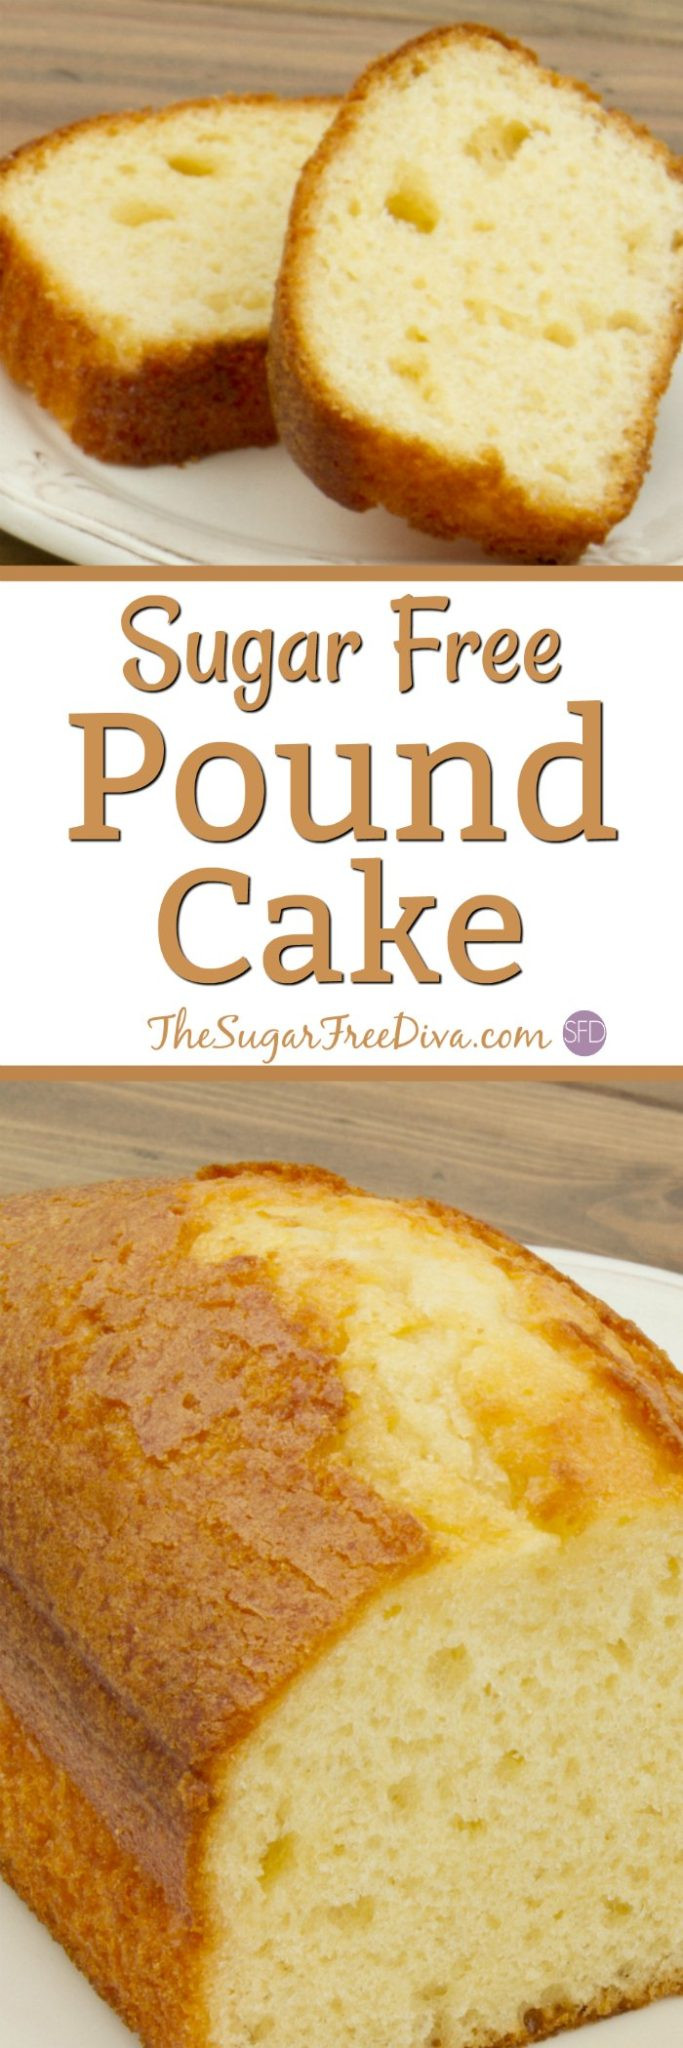 Diabetic Pound Cake
 Sugar Free Pound Cake